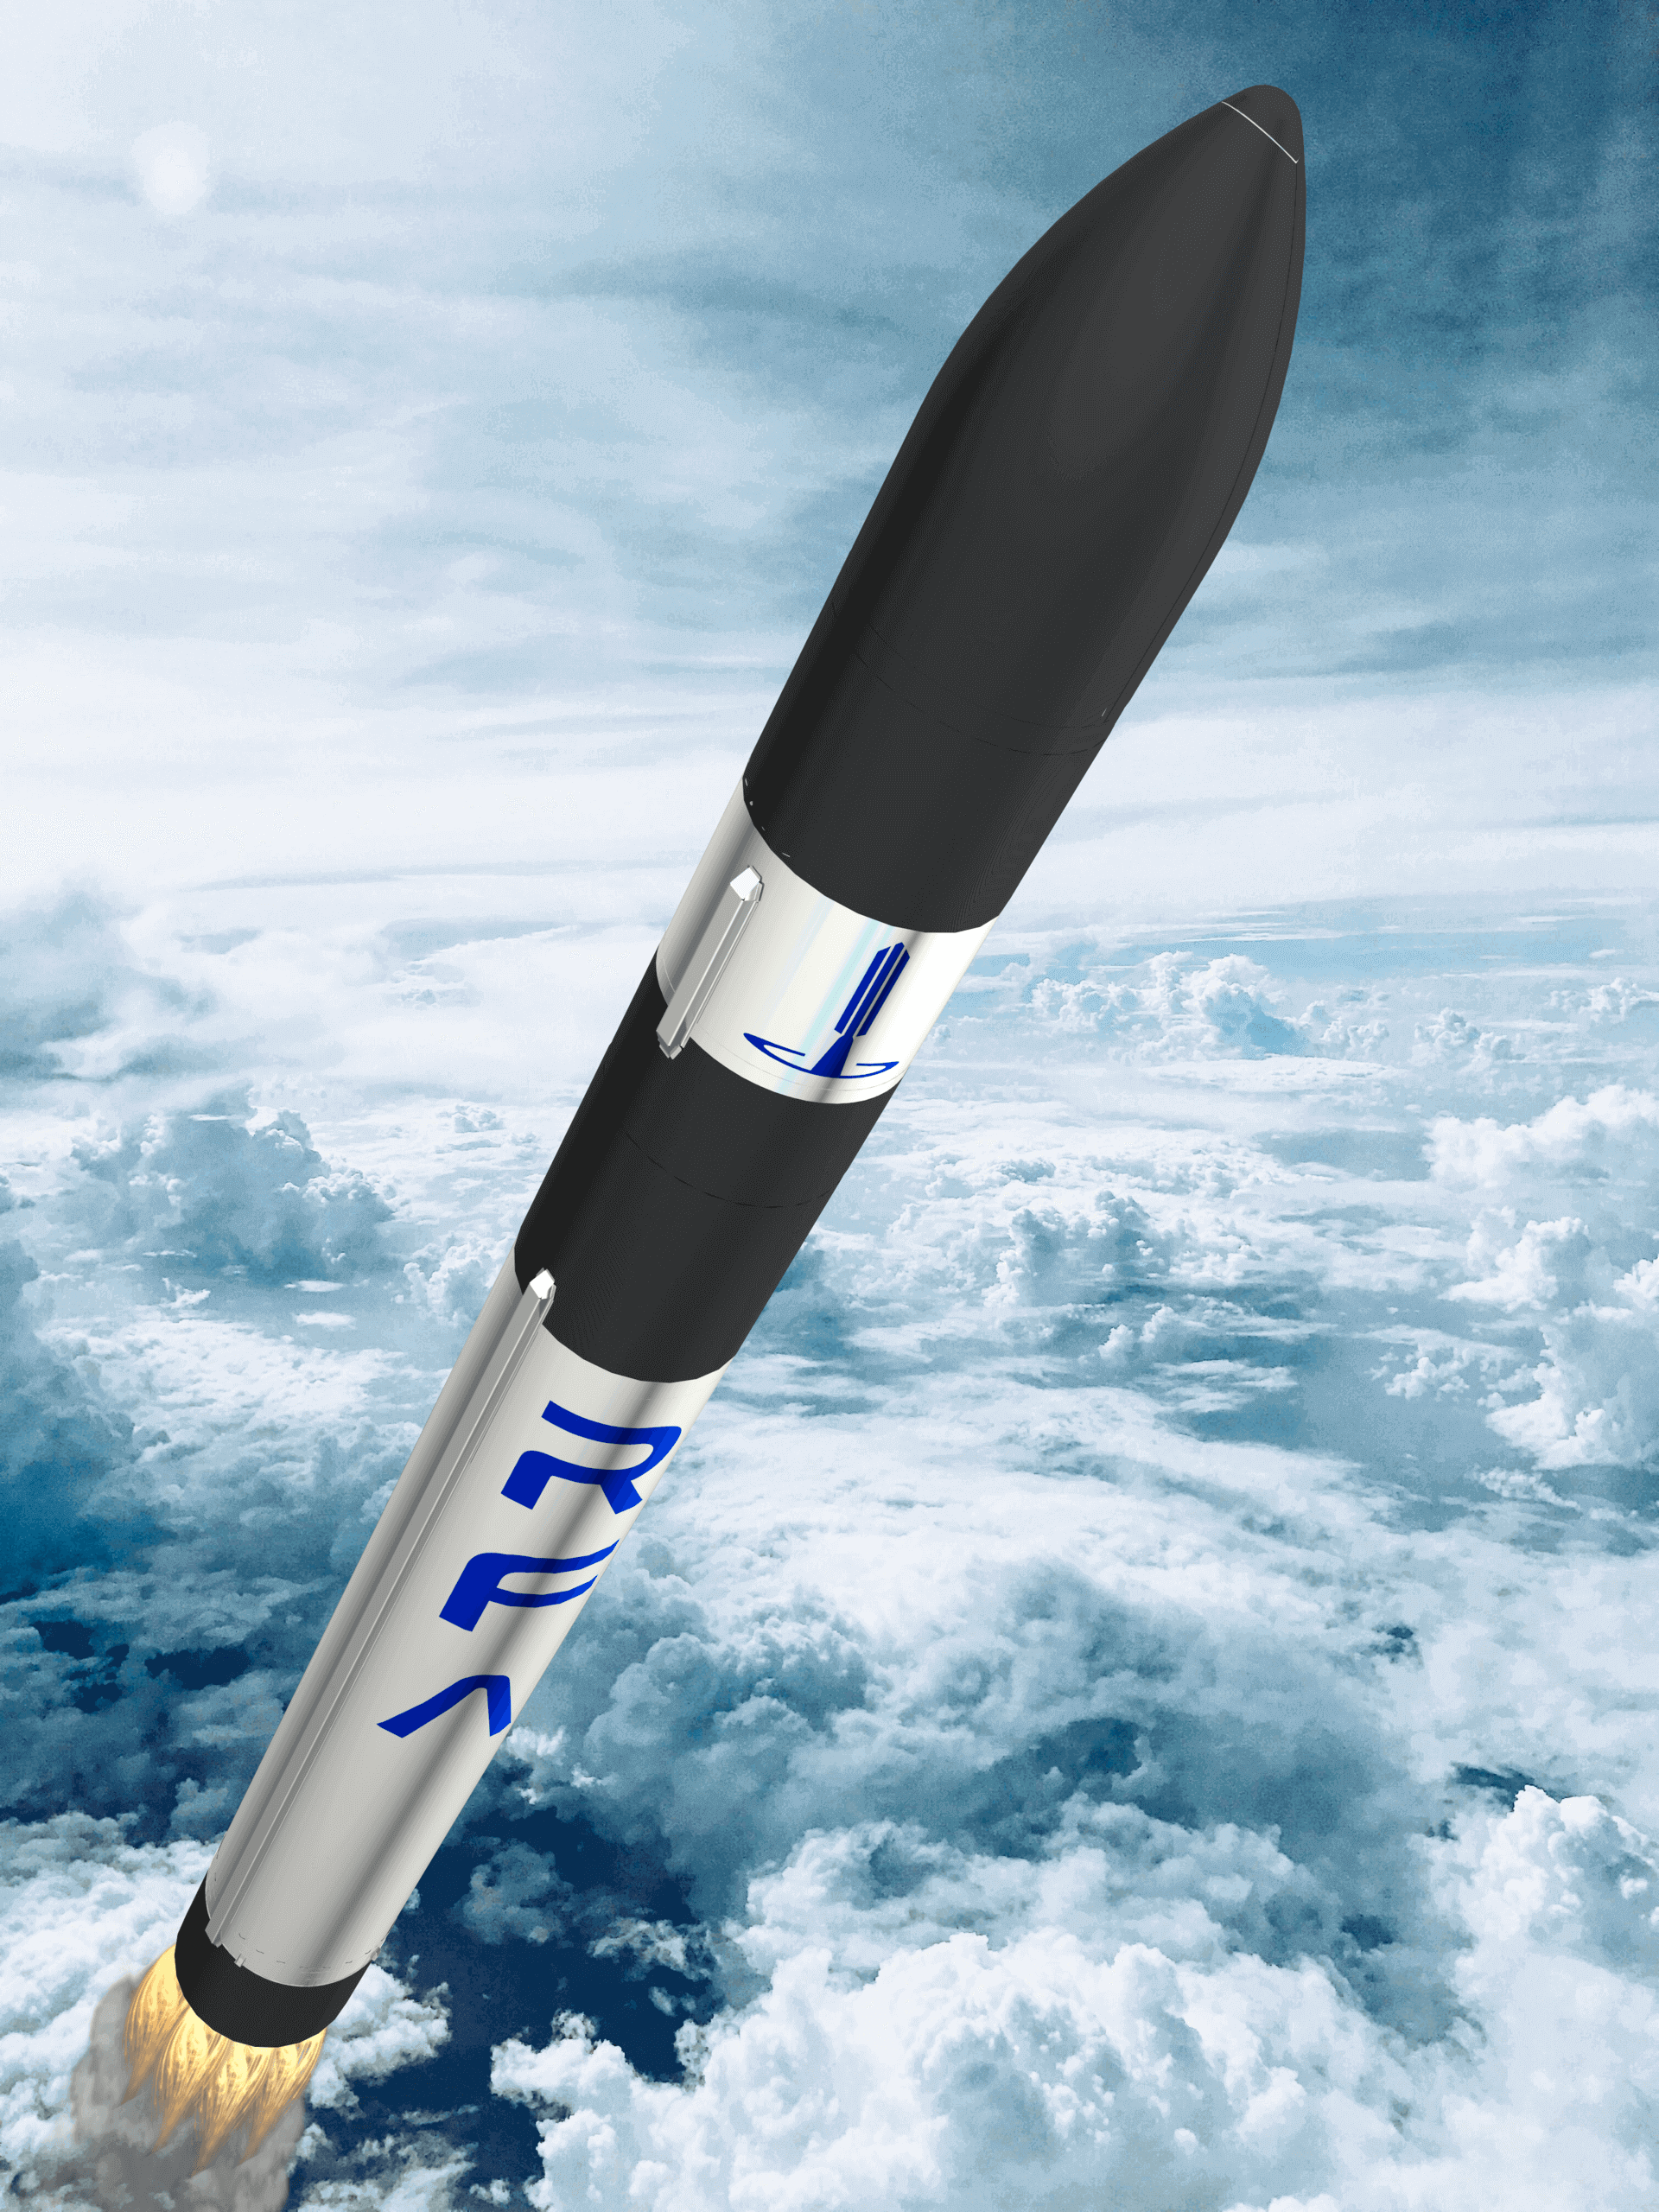 RFA One rocket